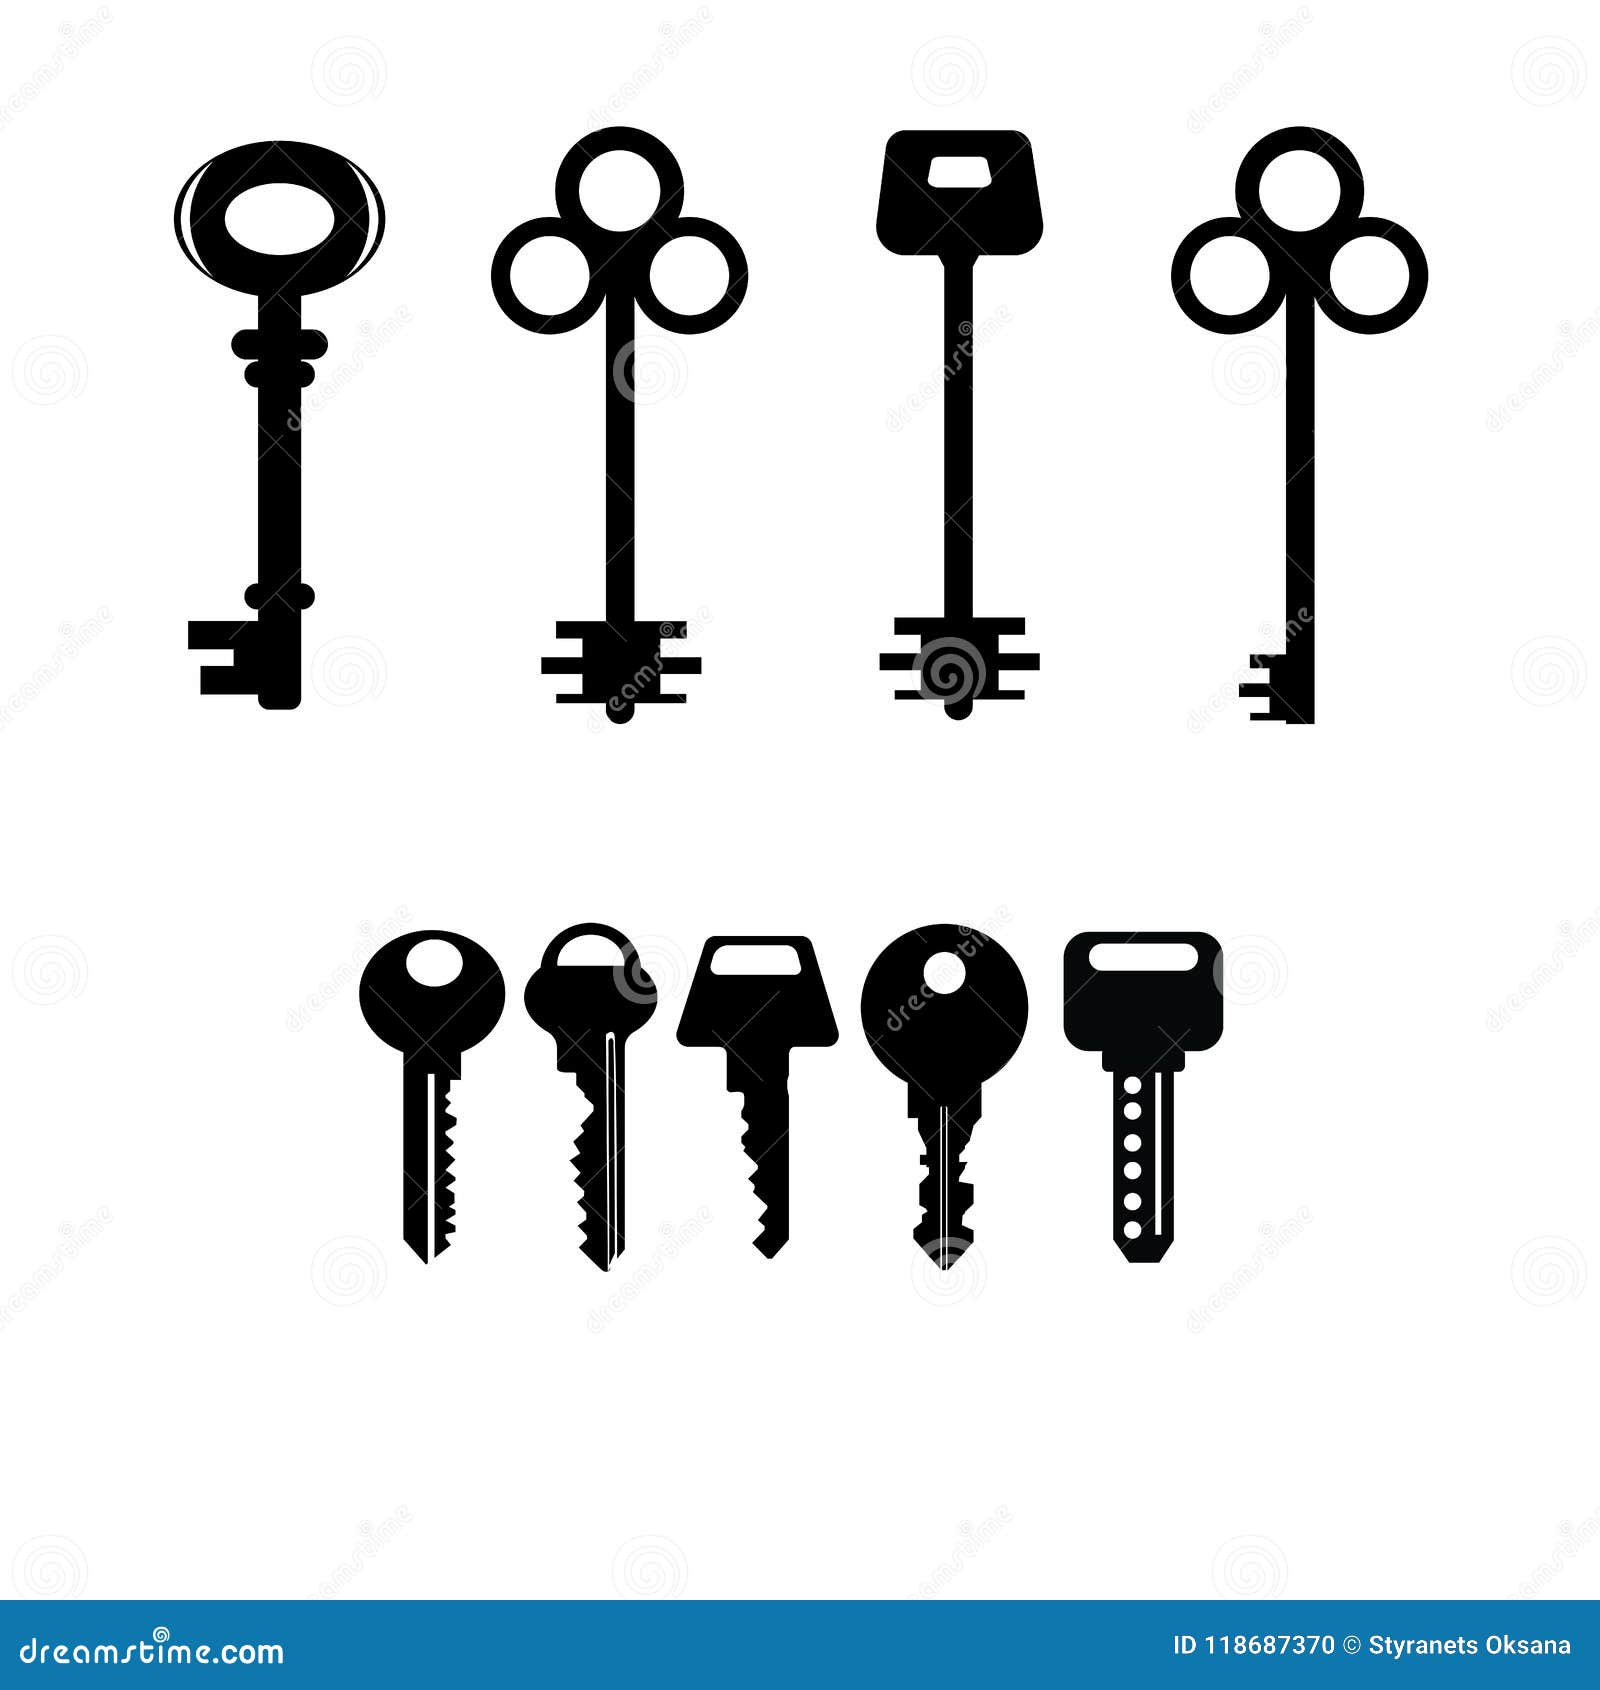 keys 